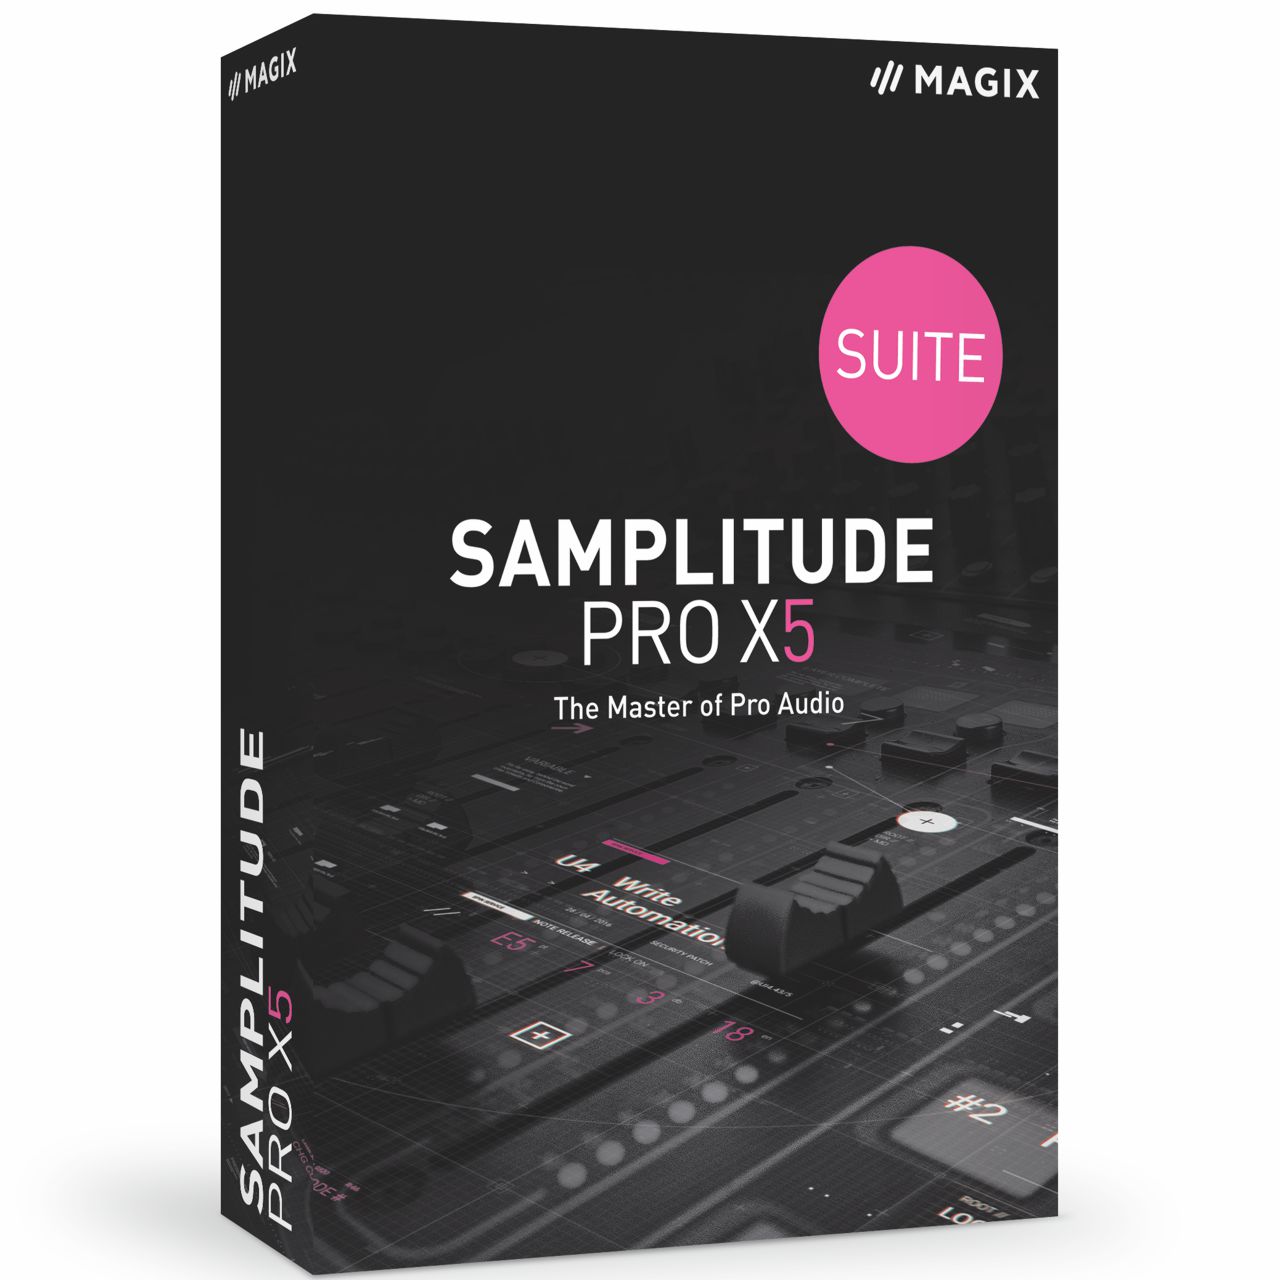 Magix Samplitude Pro X5 Suite (no extras)